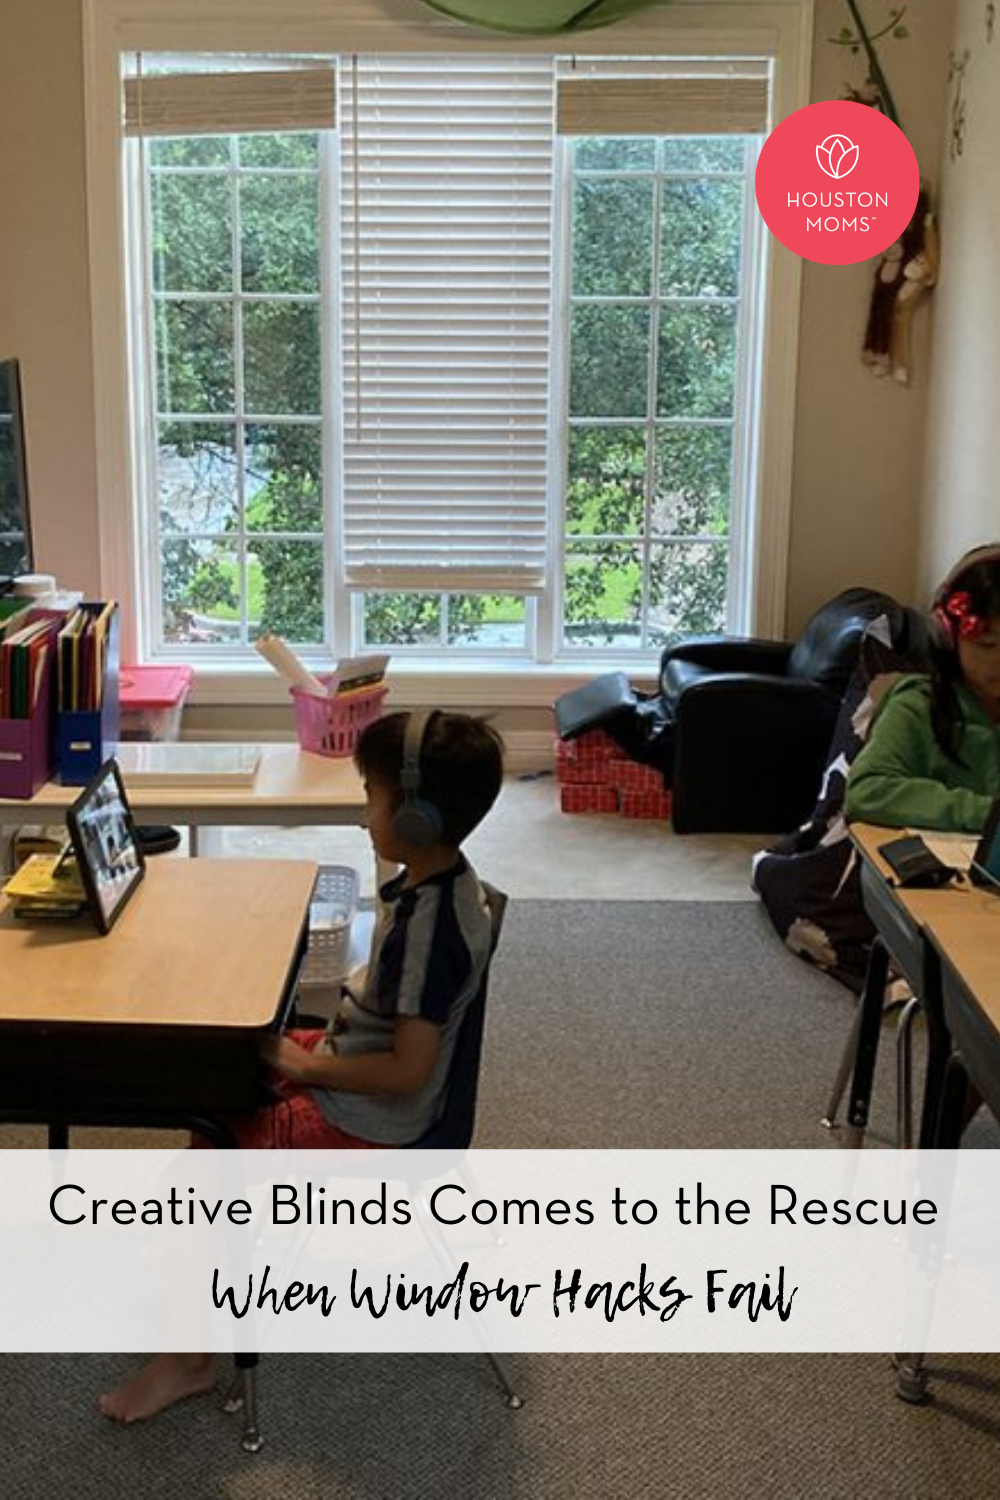 Houston Moms "Creative Blinds Comes to the Rescue When Window Hacks Fail" #houstonmoms #Momsaroundhouston